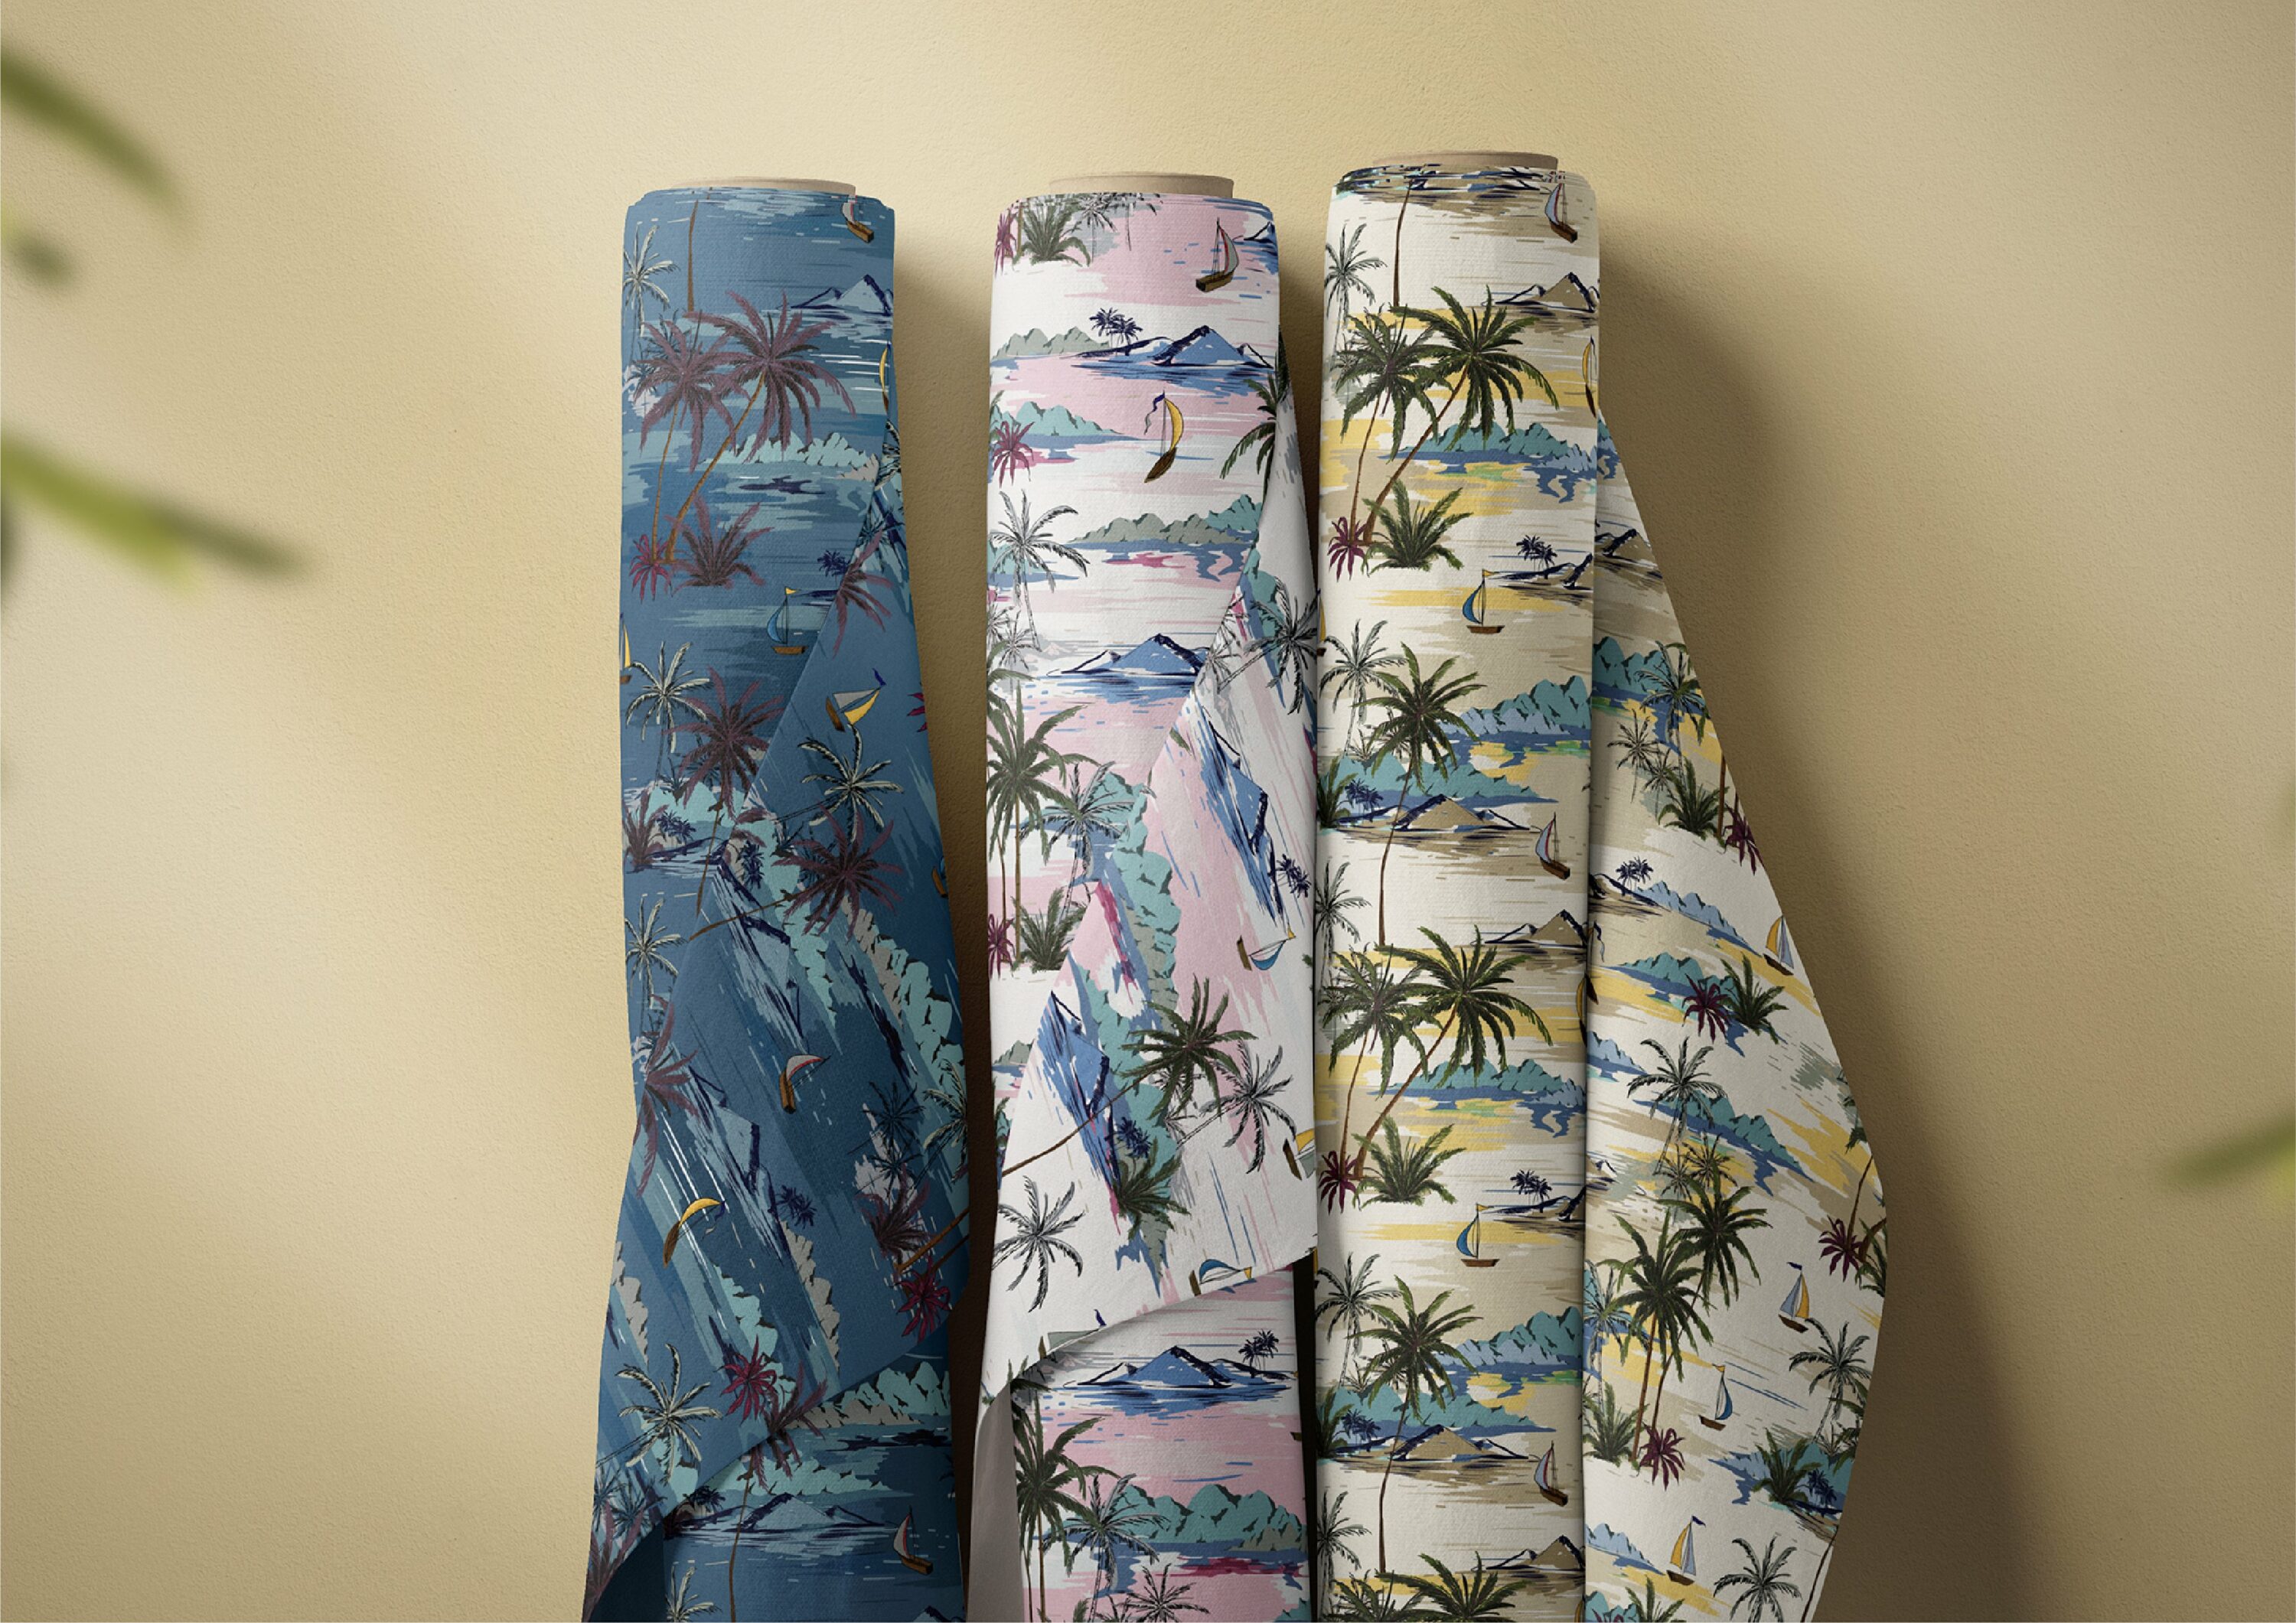 Three fabrics with the island illustrations.